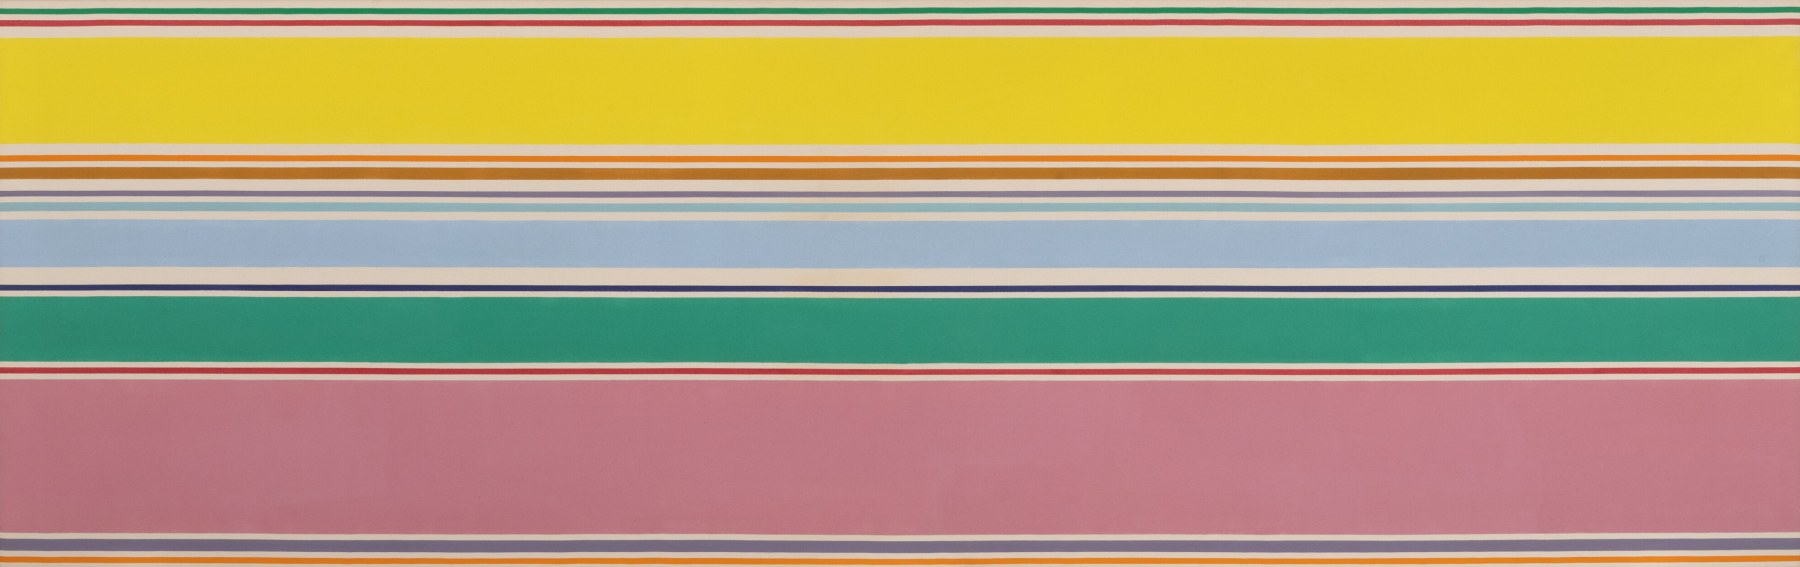 KENNETH NOLAND (1924-2010)

Color Pane

1967

Acrylic on canvas

48.5 x 153 inches

123.2 x 388.6cm